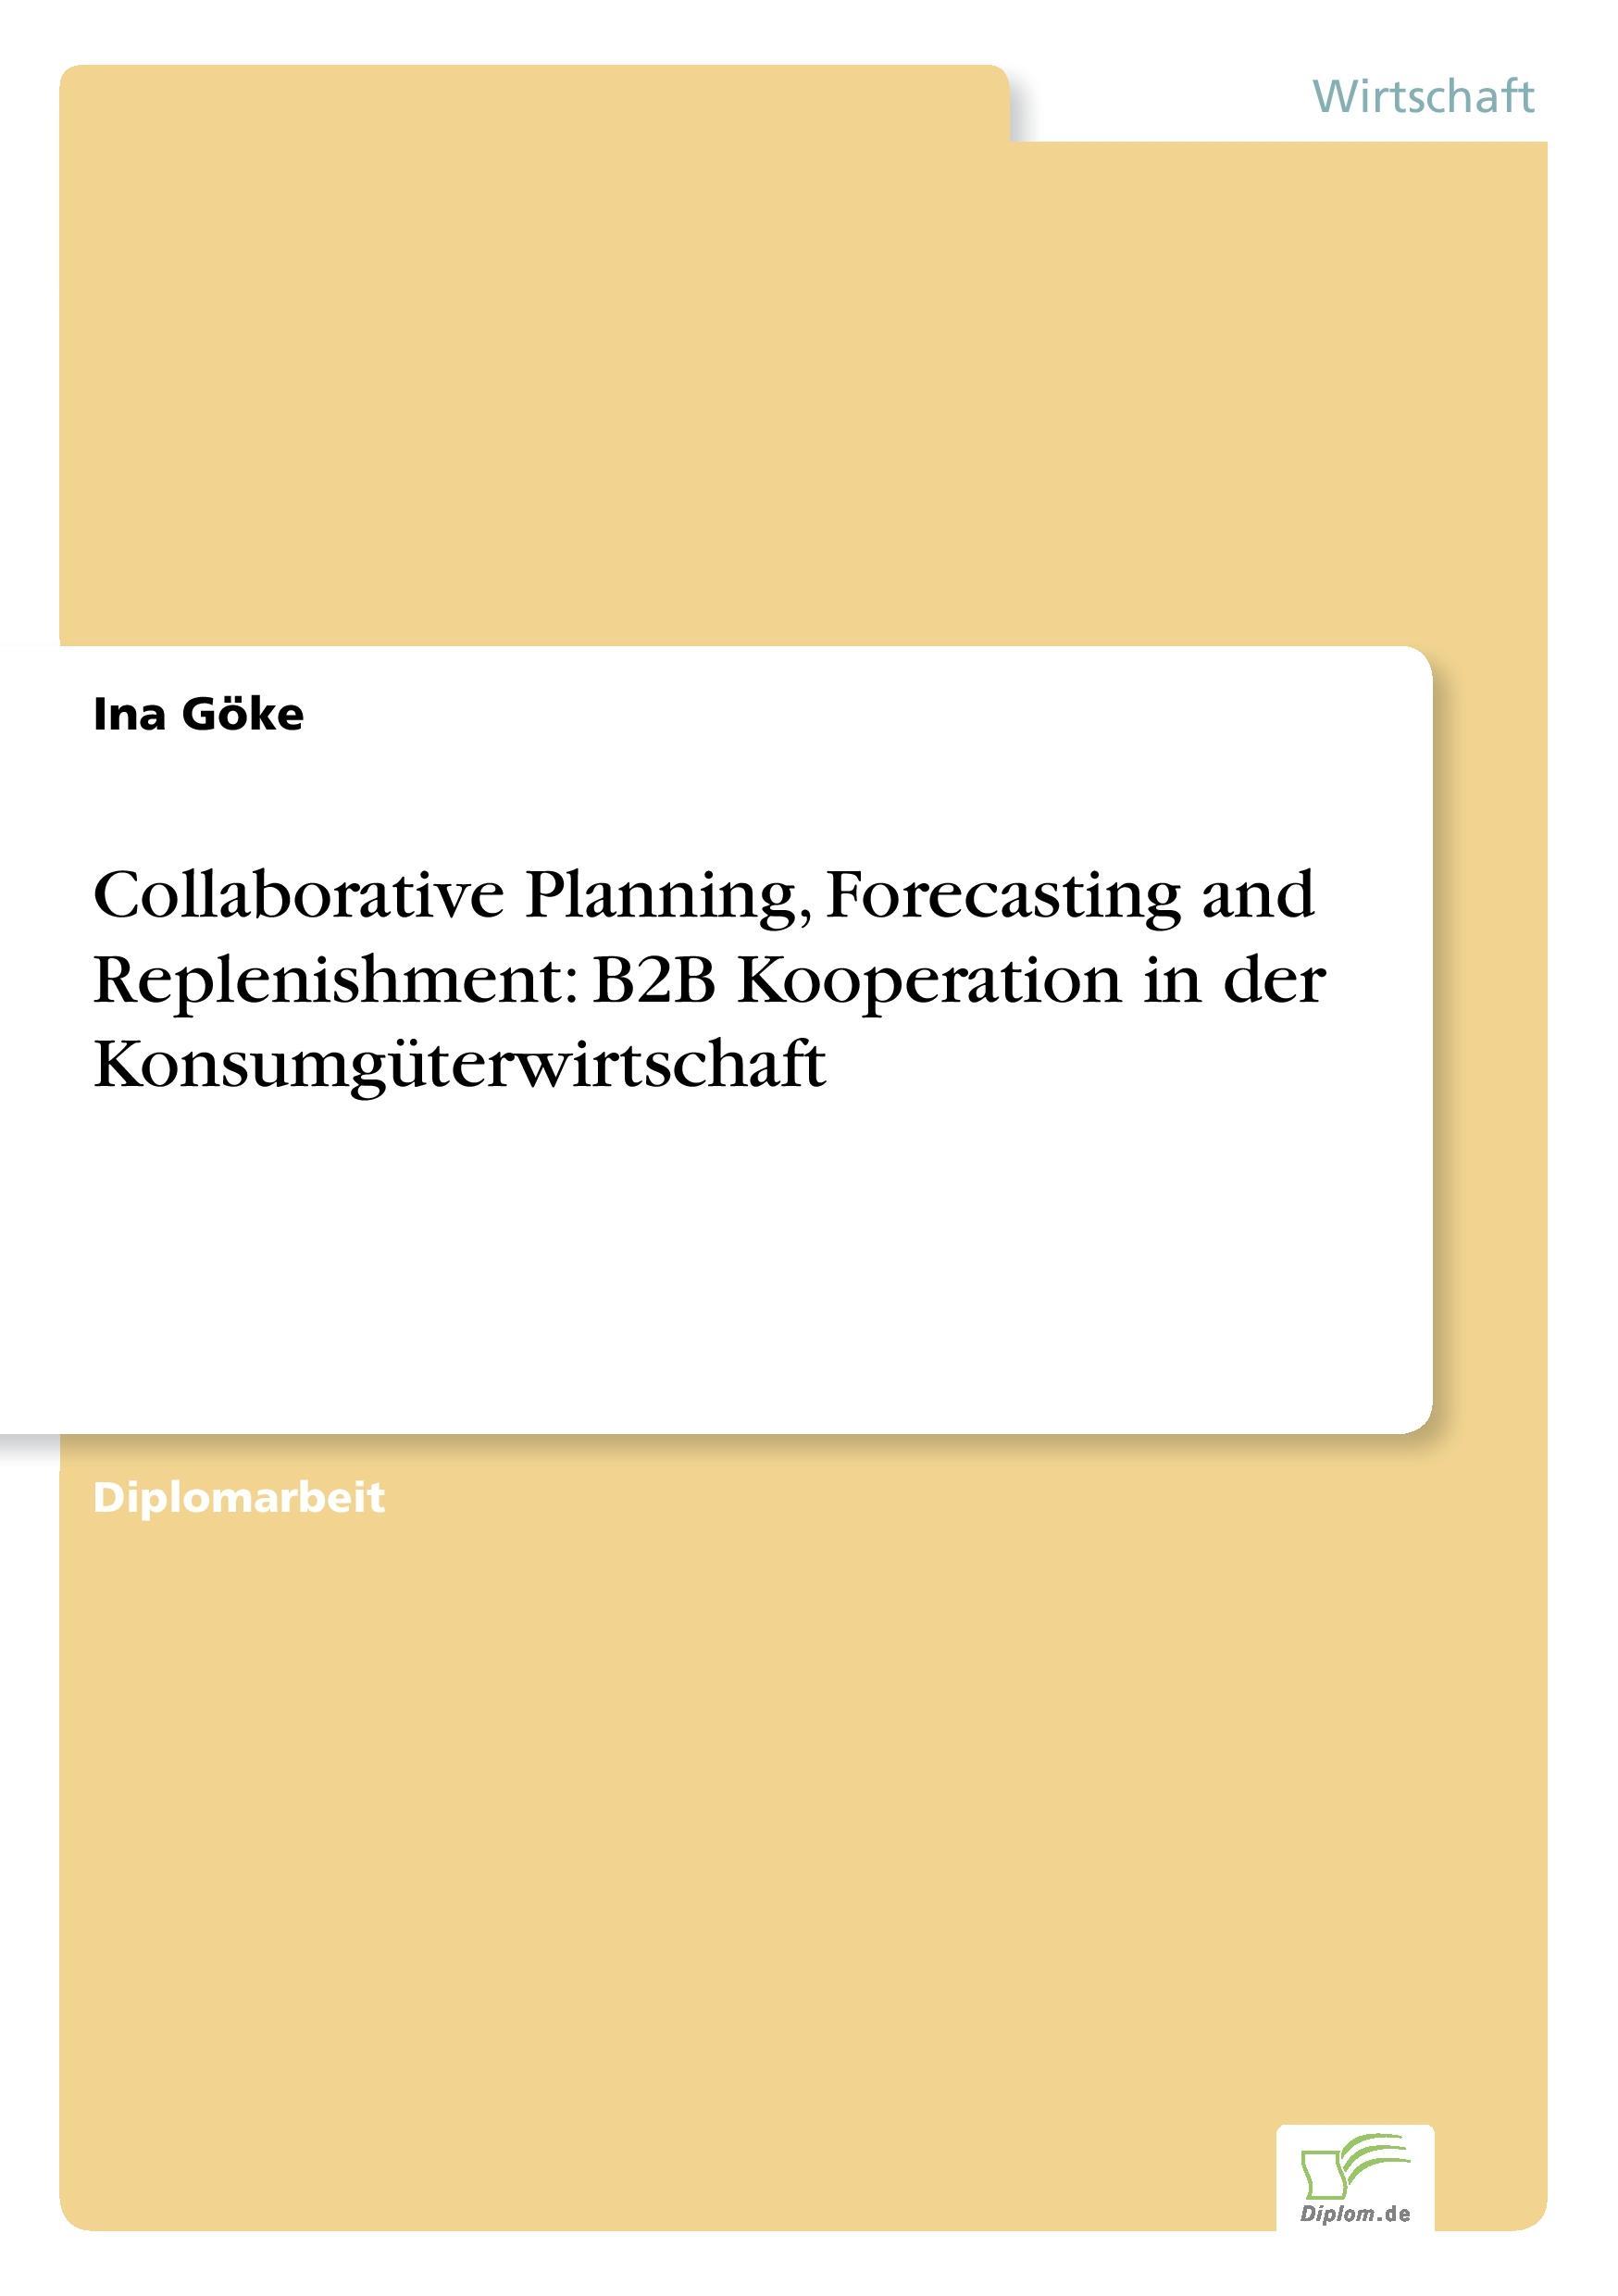 Collaborative Planning, Forecasting and Replenishment: B2B Kooperation in der Konsumgueterwirtschaft - Goeke, Ina